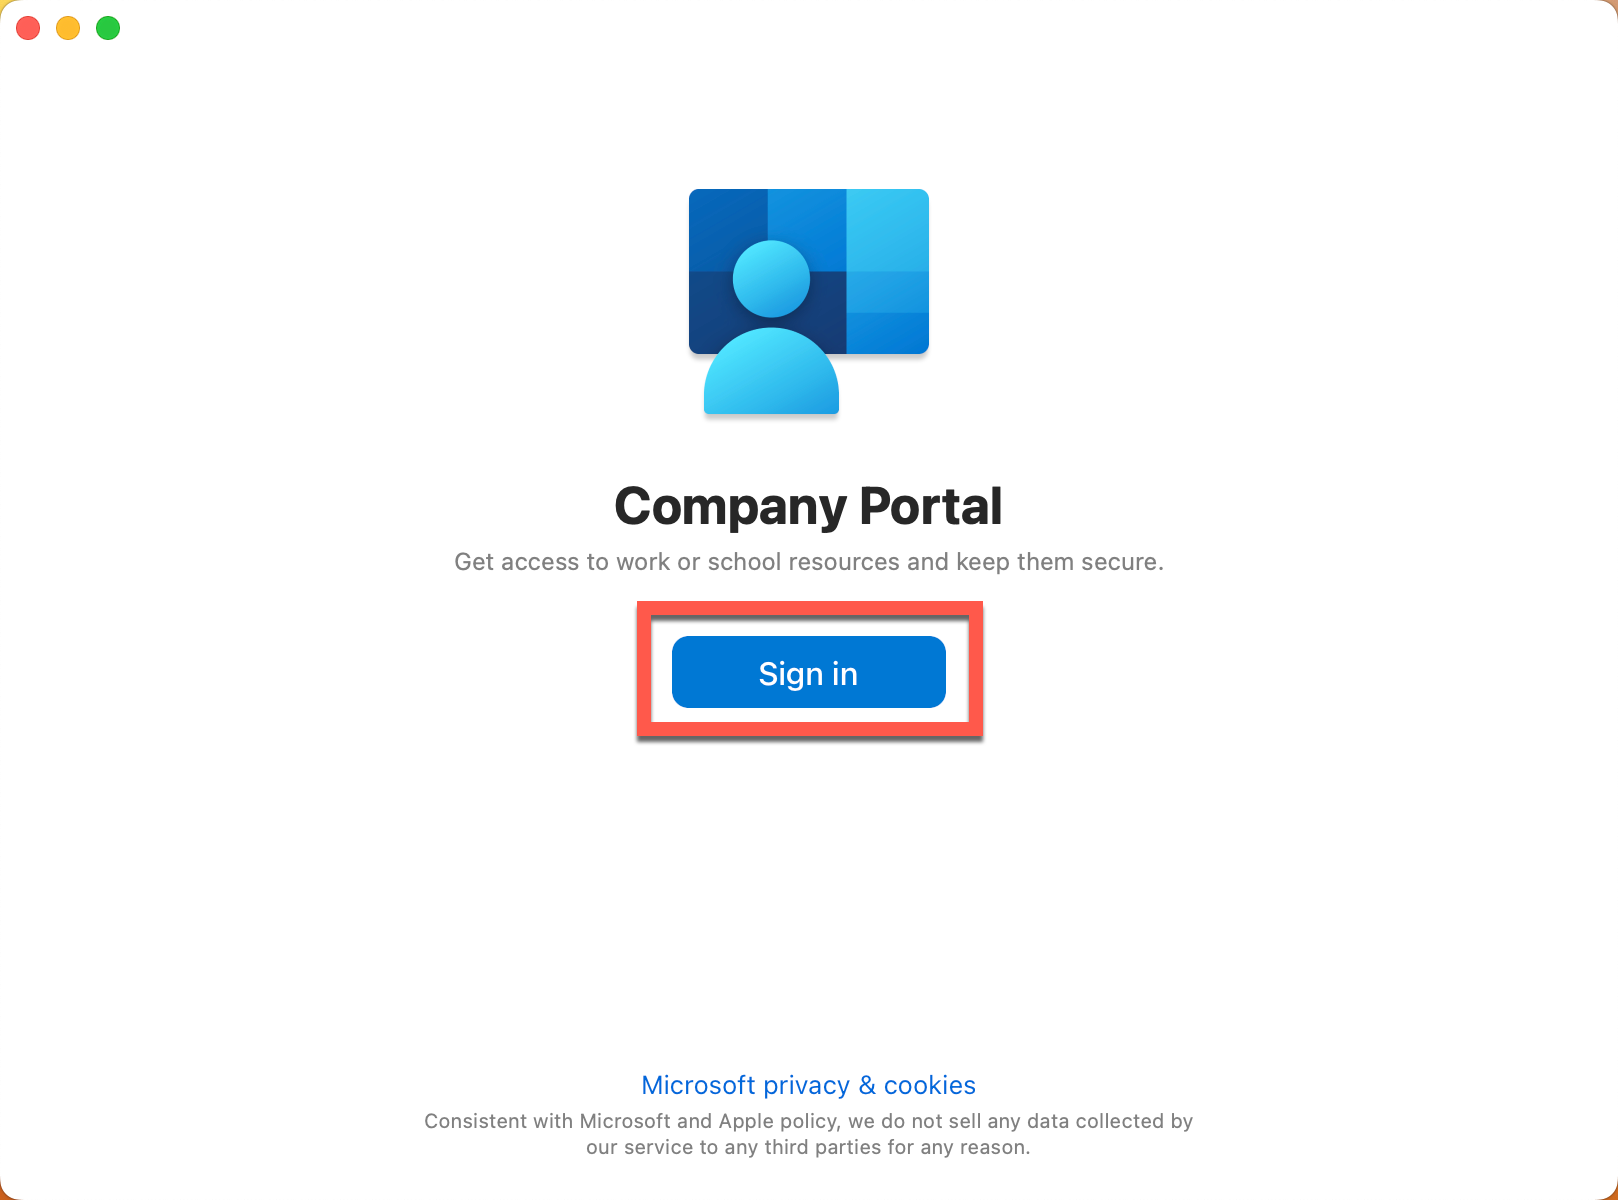 Company Portal - Sign in